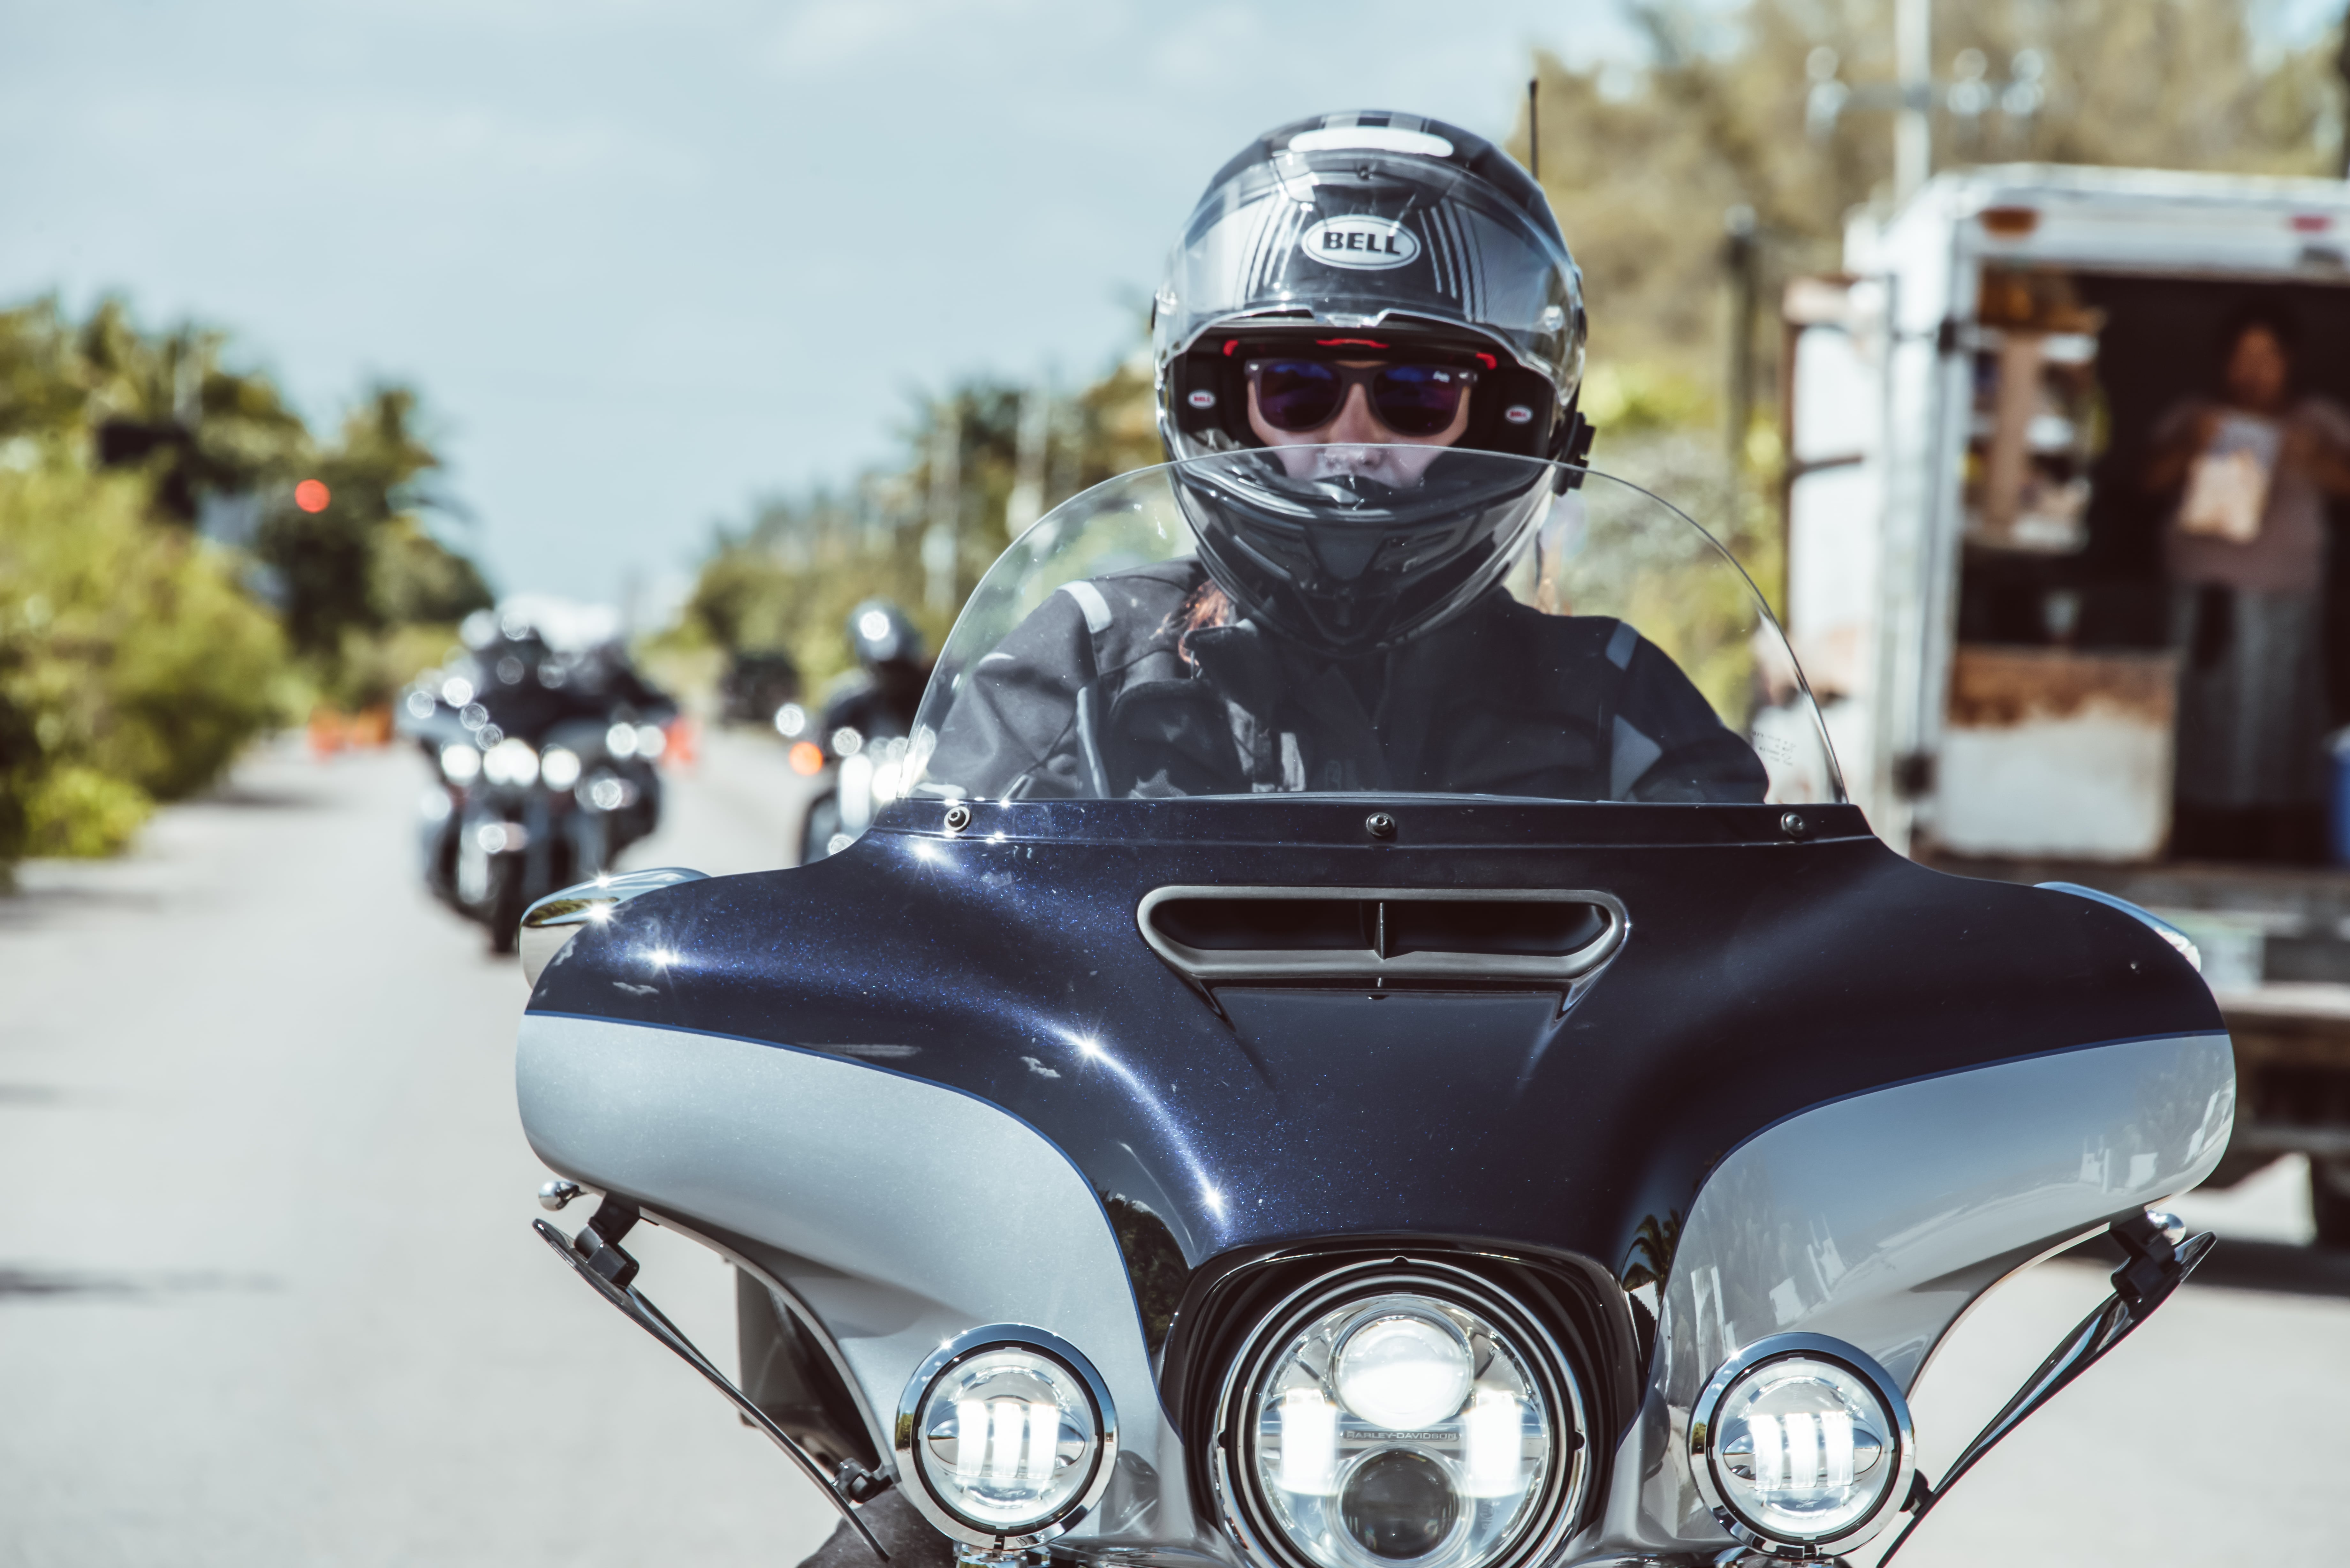  Harley-Davidson Ultra Limited 2019